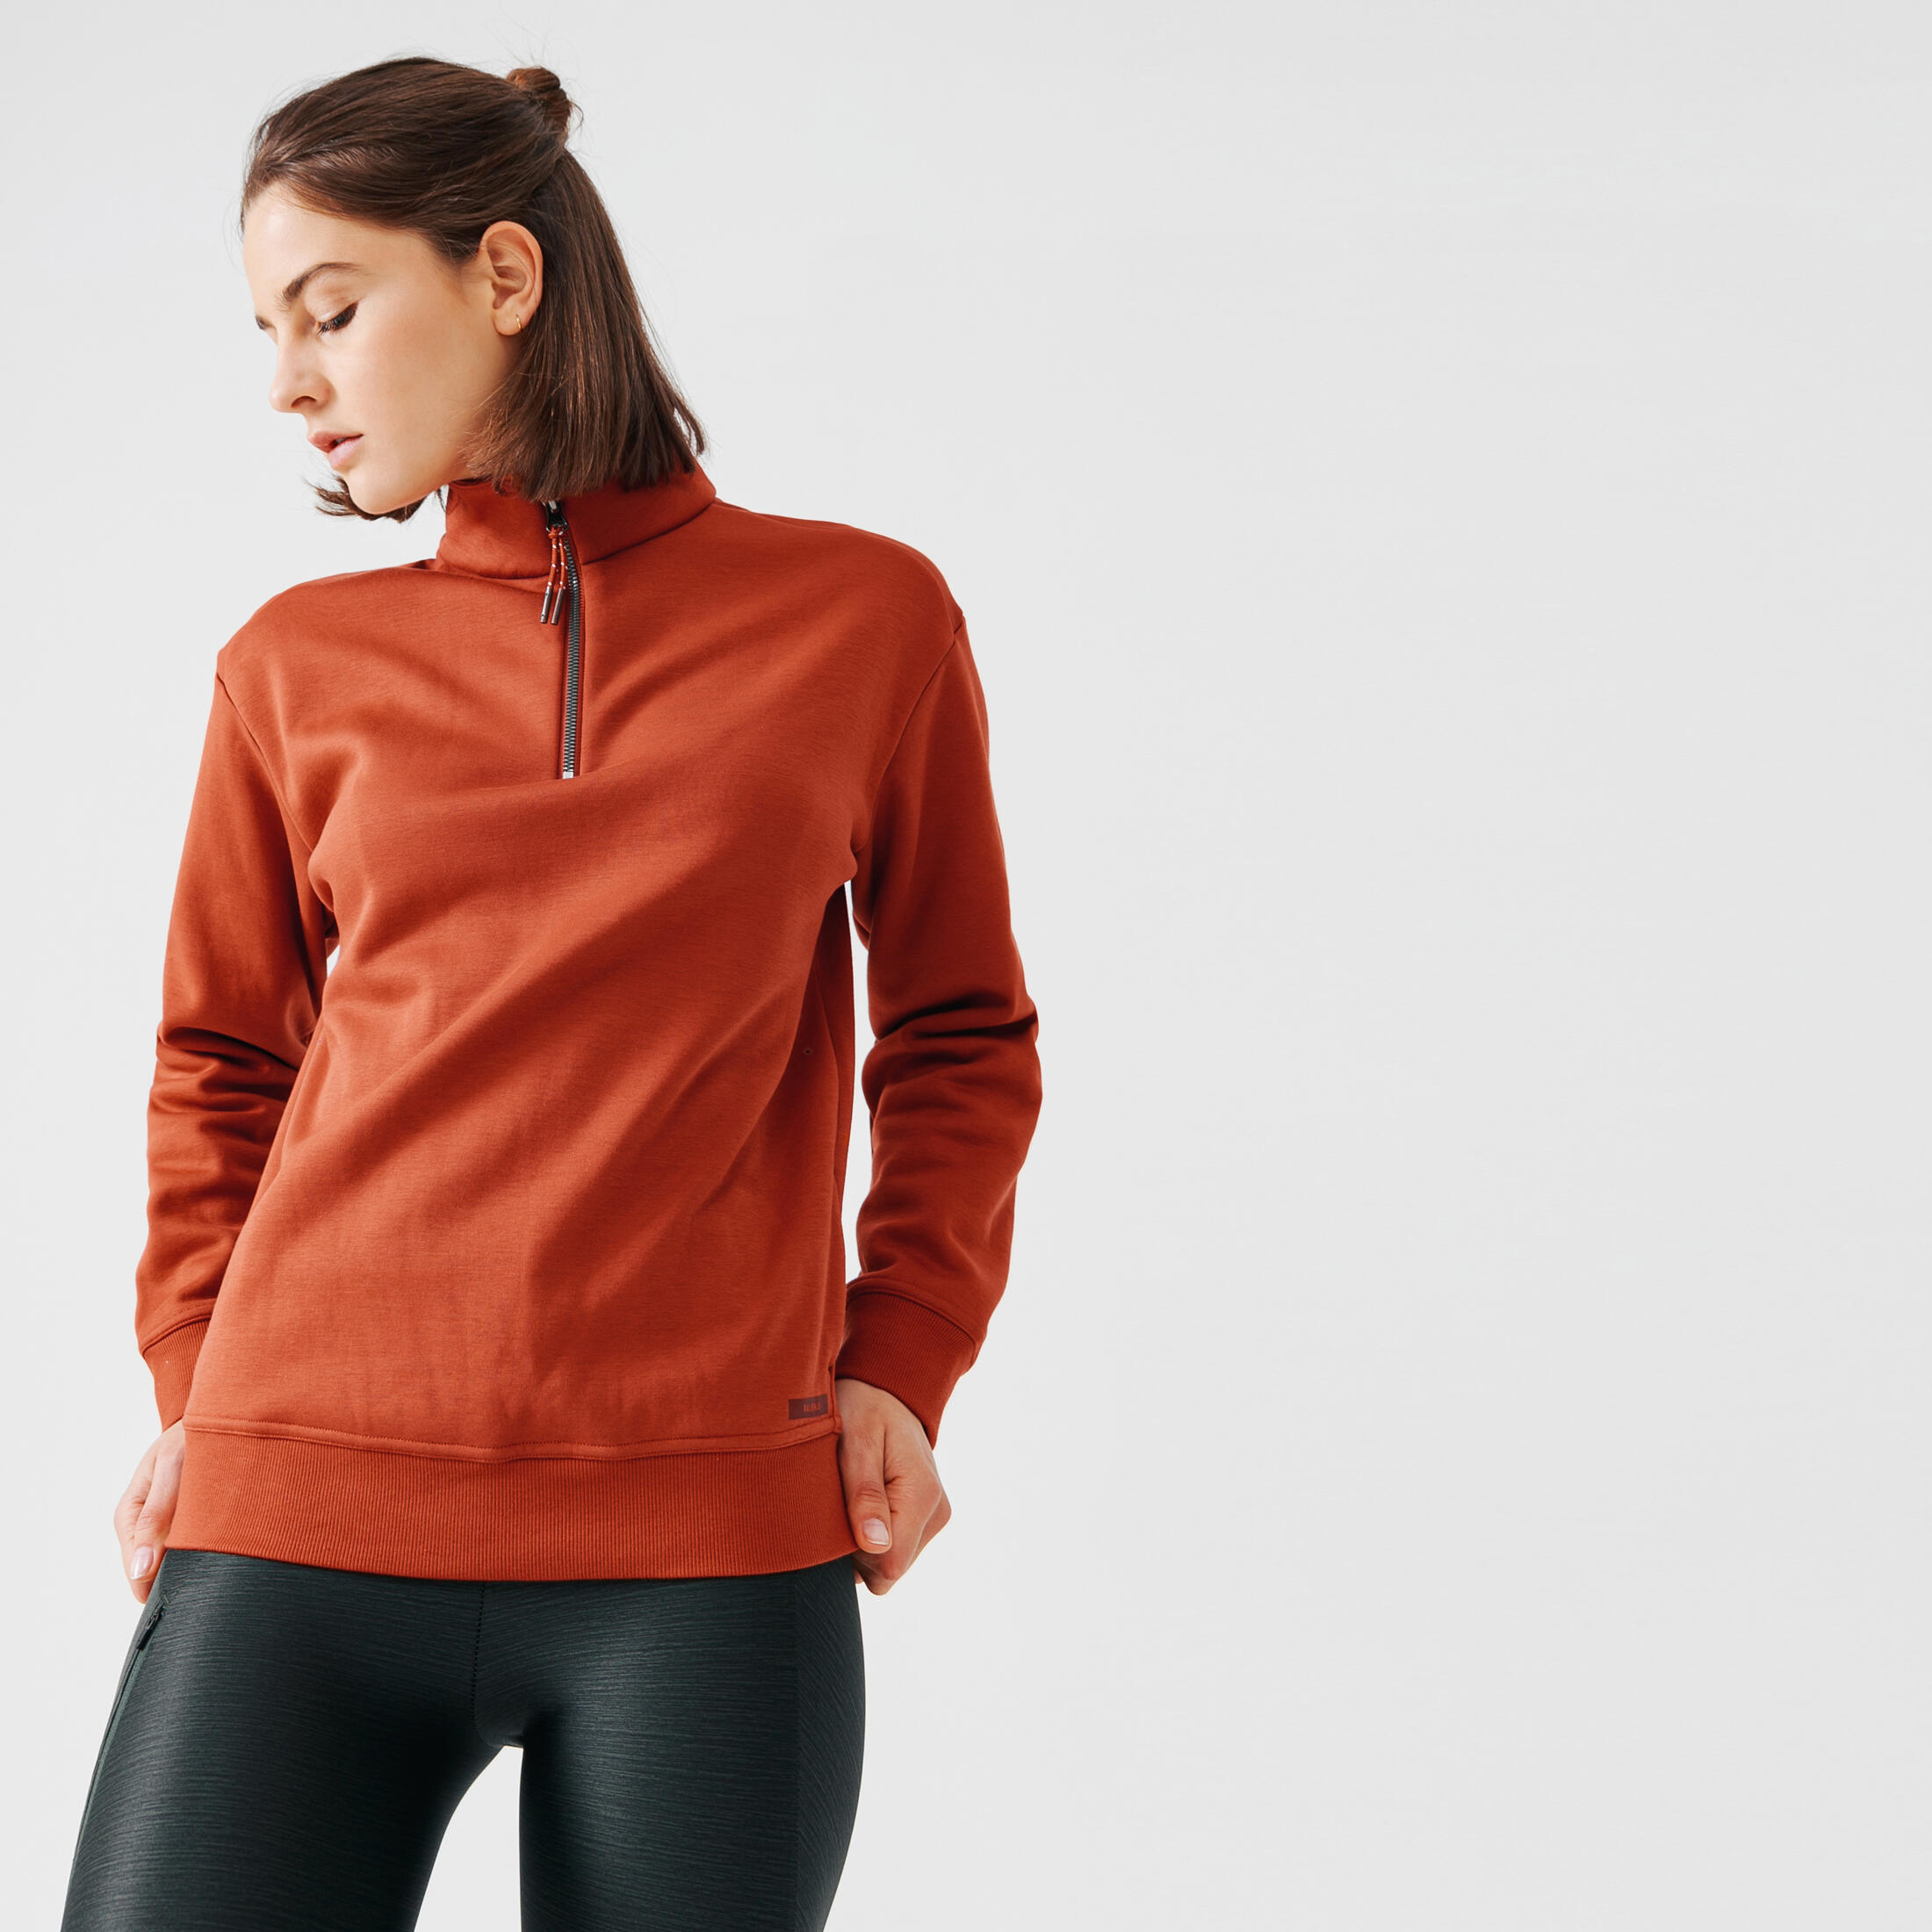 KALENJI Women's zip-collar running sweatshirt Warm+ - brown